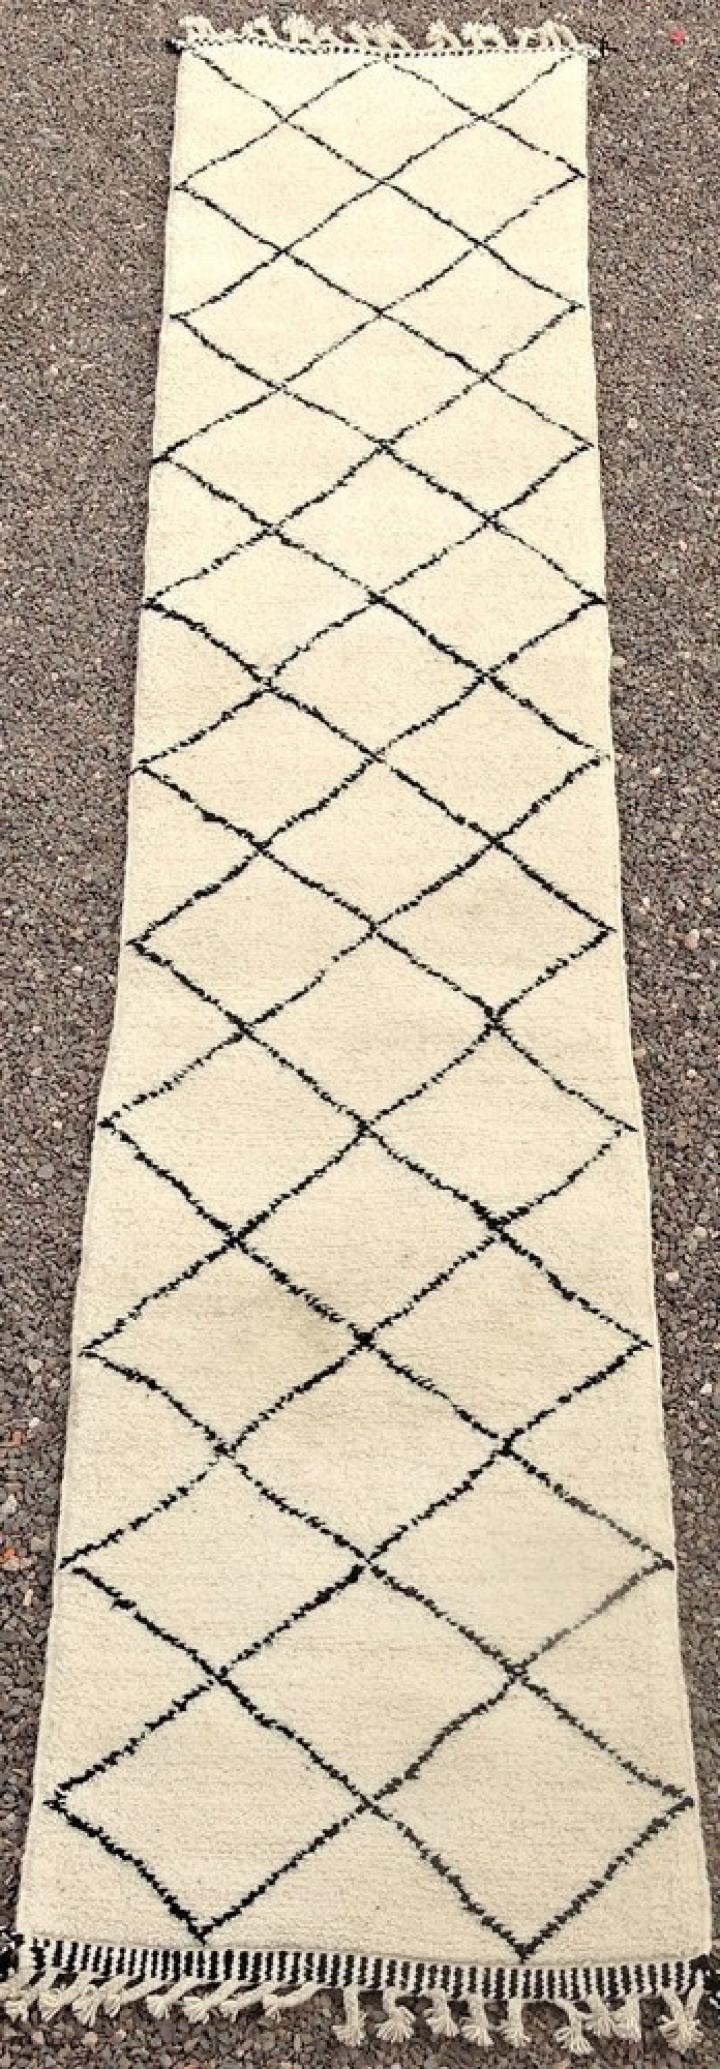 Berber rug #BO51122  from catalog Beni Ourain Large sizes